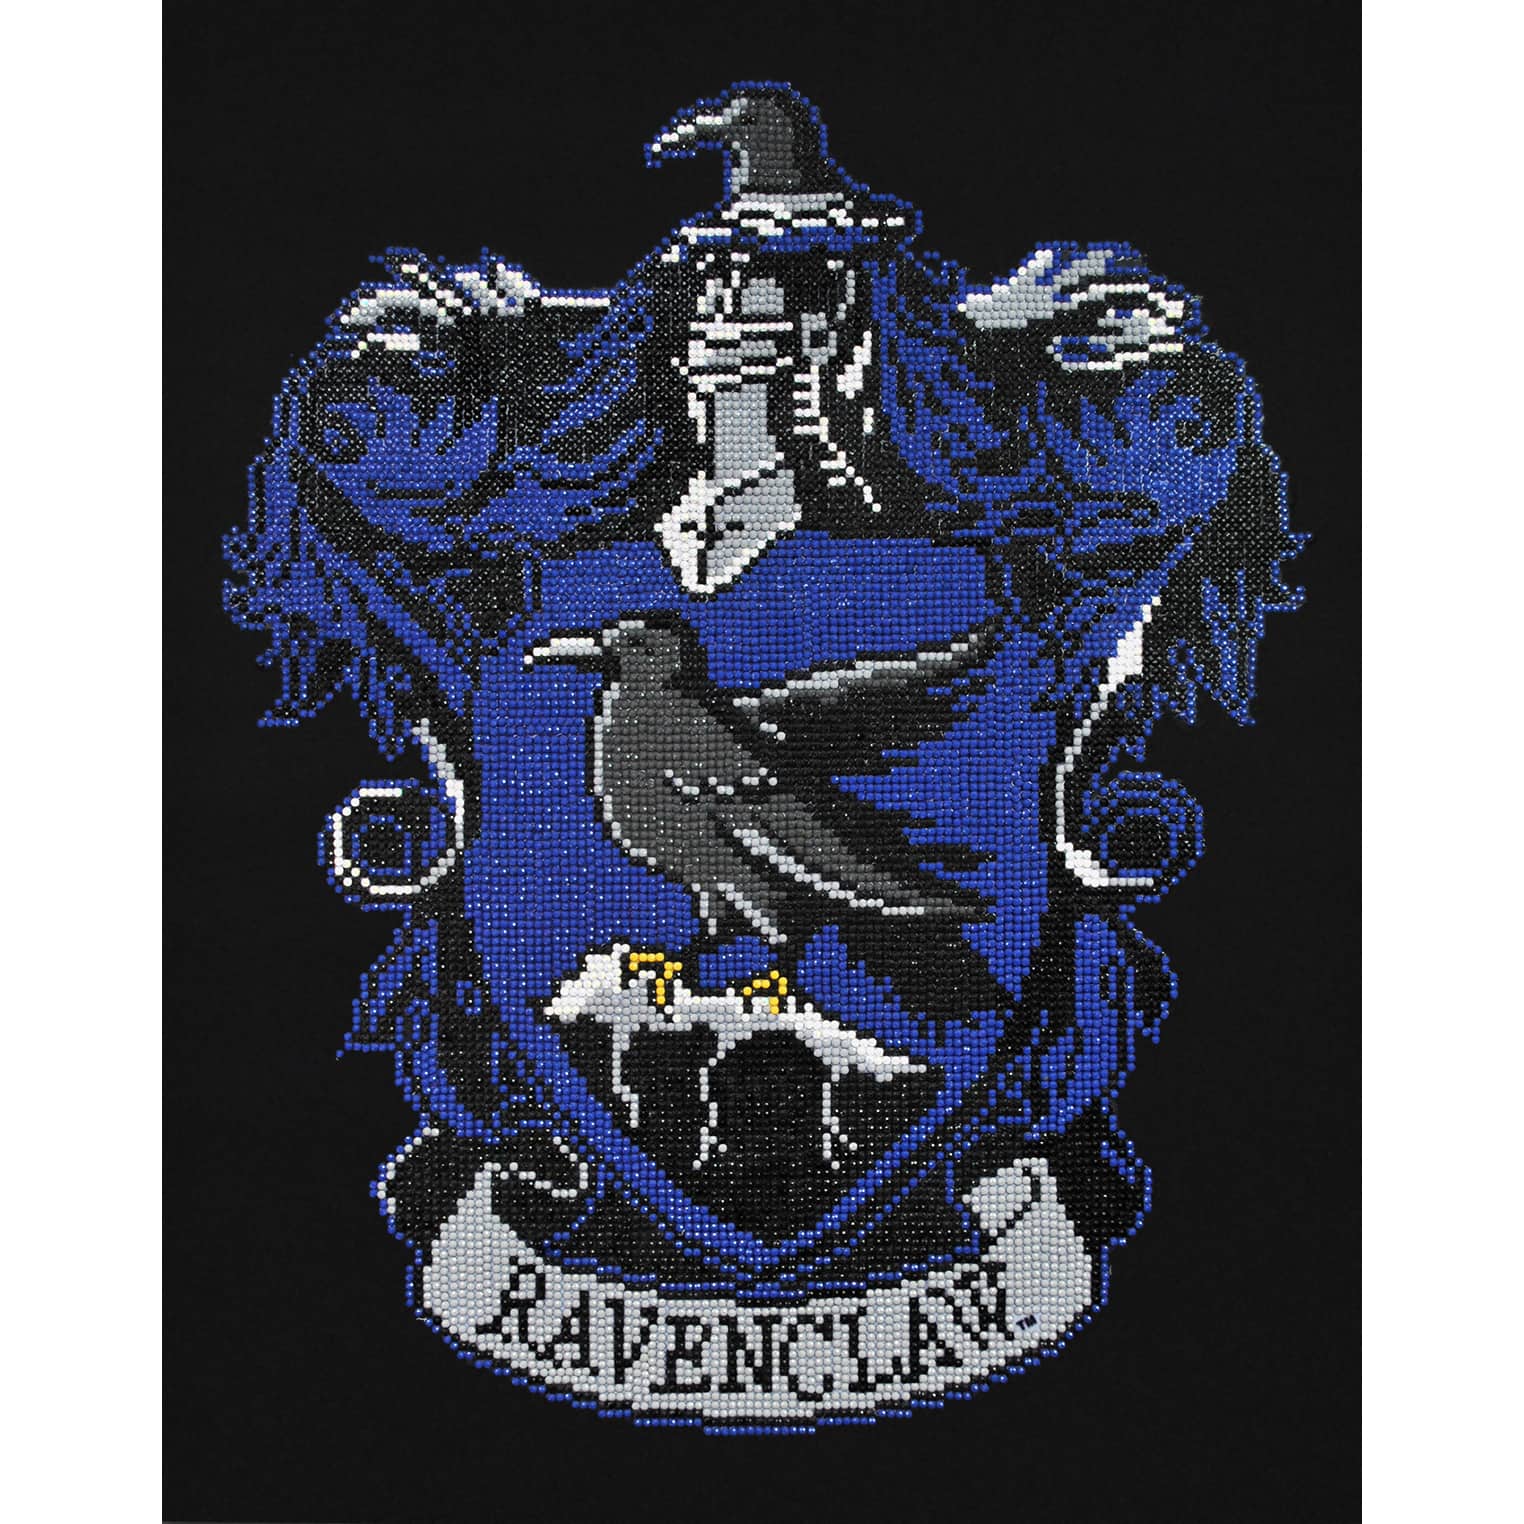 Ravenclaw HP Wood Decoration - Boutique Harry Potter